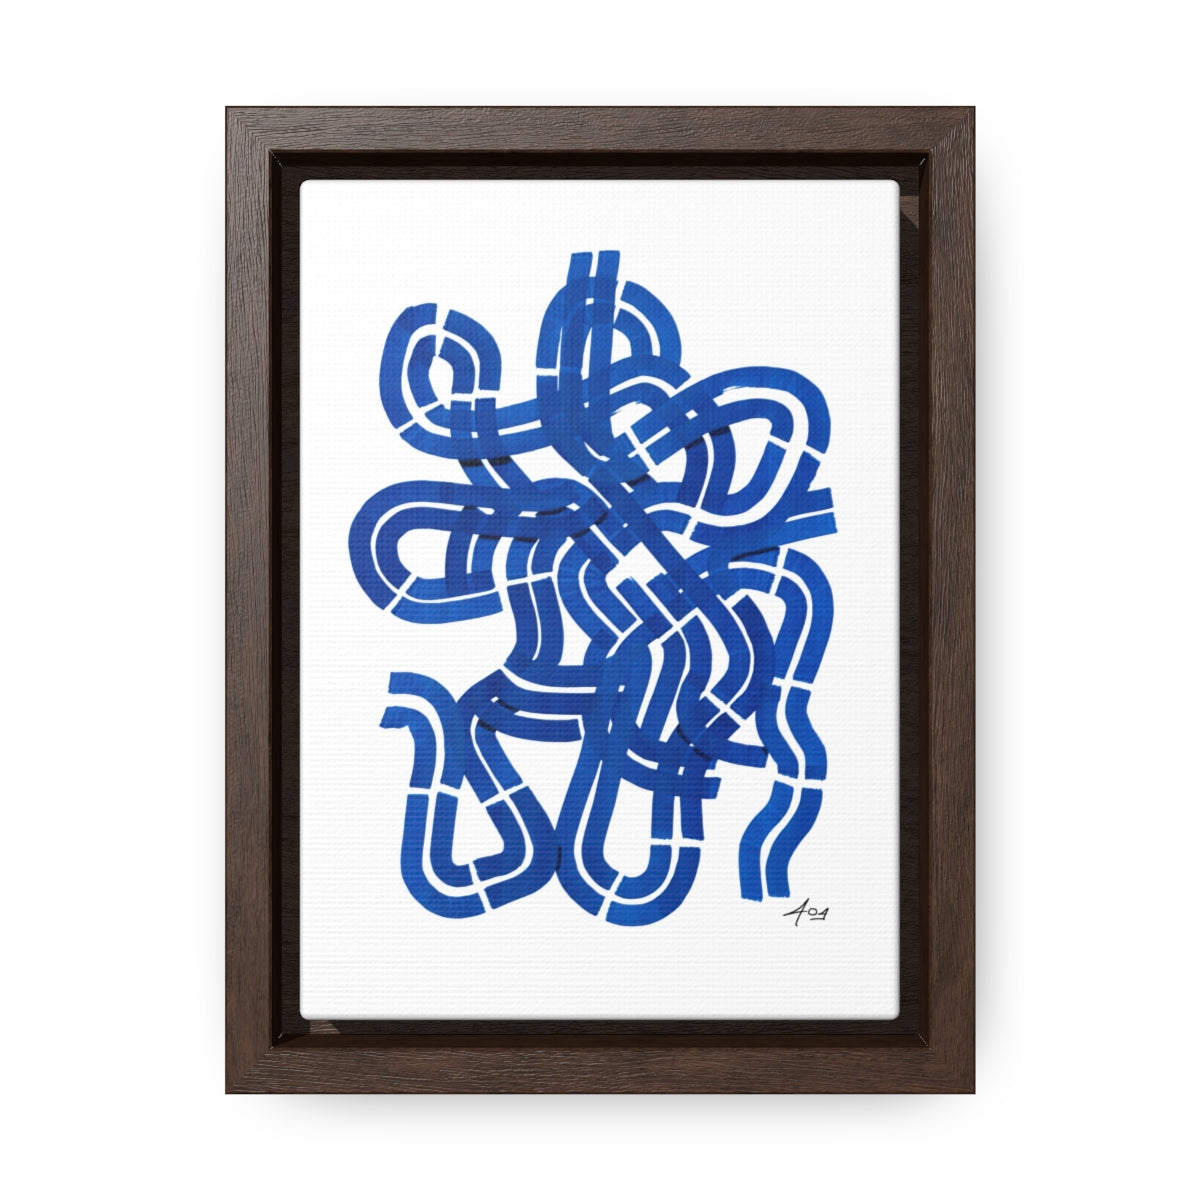 Blue Flo Design Gallery Canvas Wraps, Vertical Frame